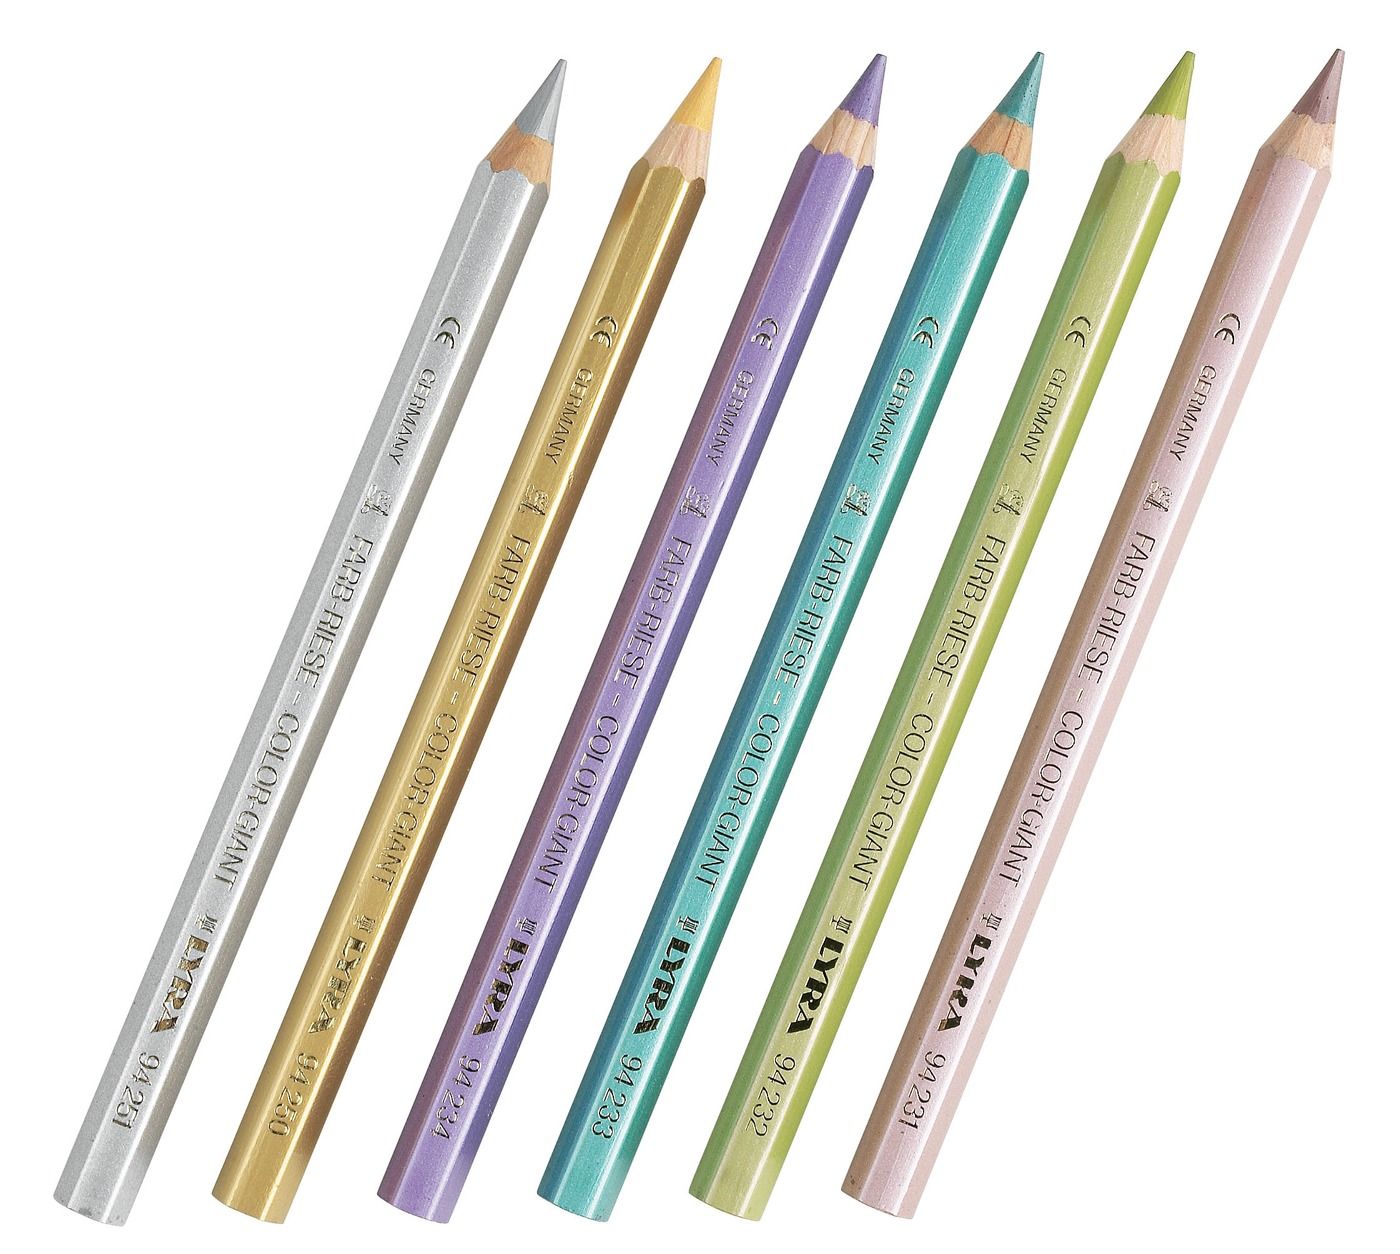 Lyra - Waldorf Selection pencils - 6 pcs